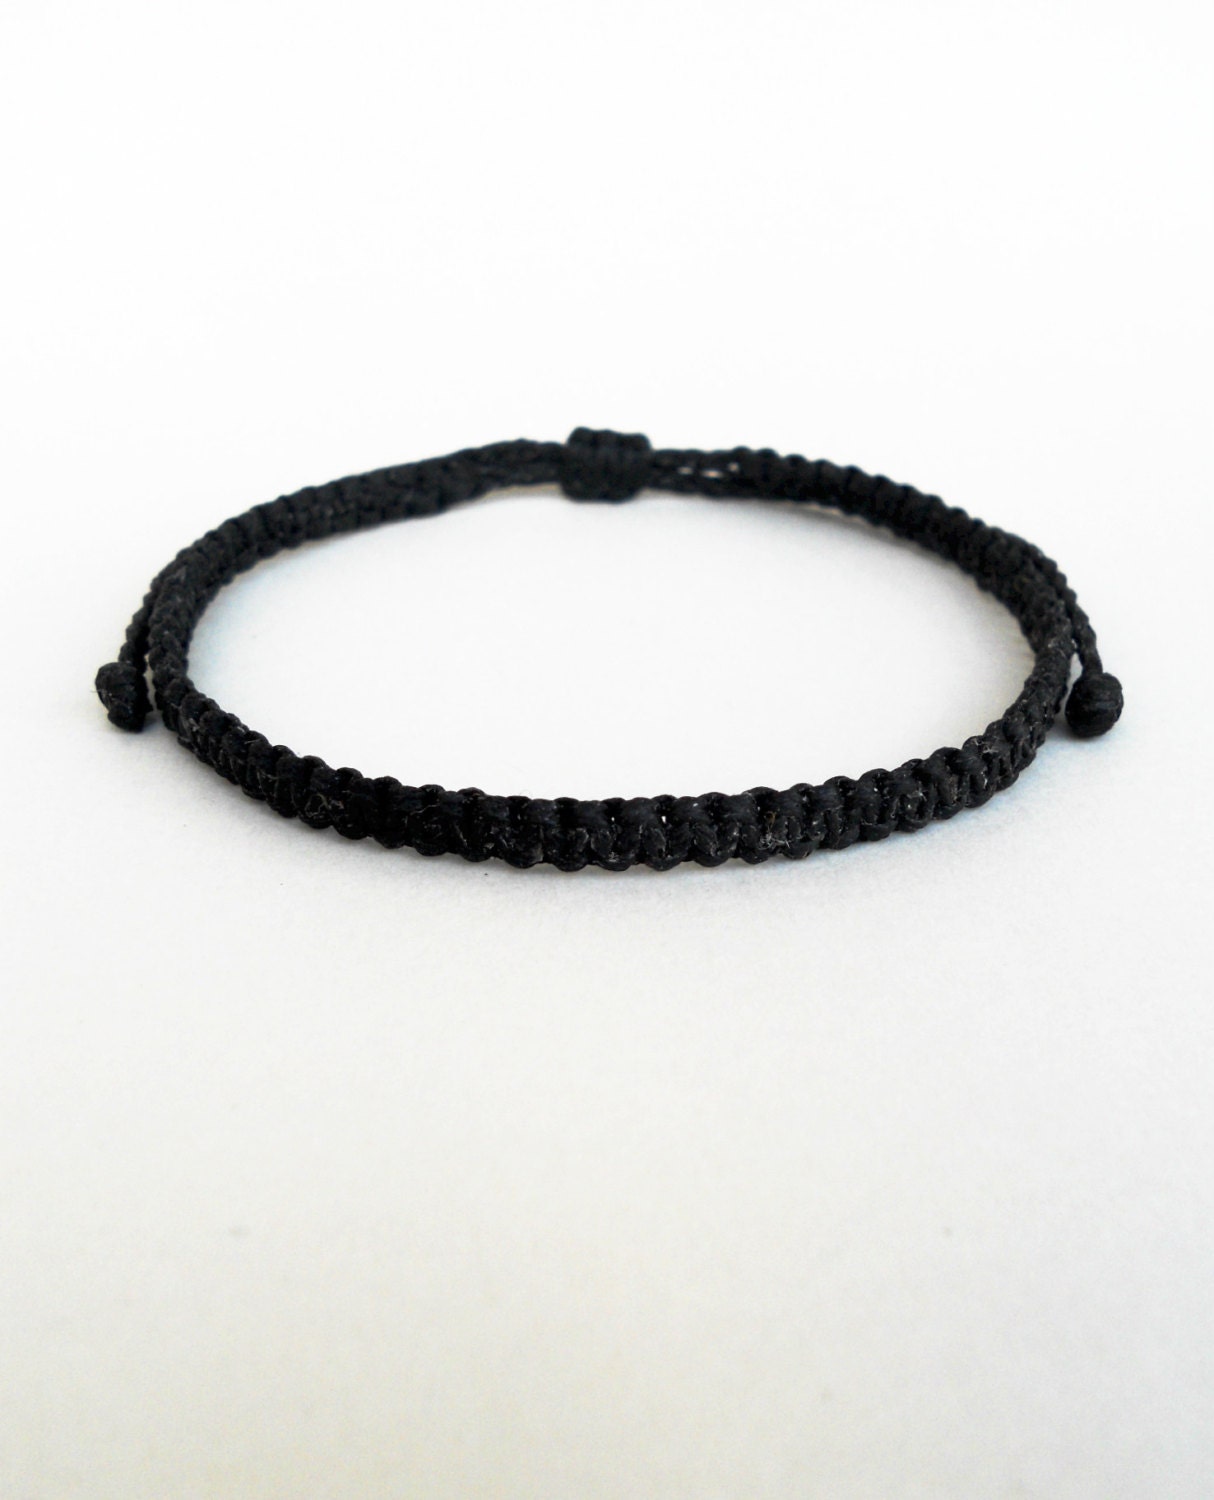 Black macrame bracelet Men bracelet Friendship bracelet Surfer | Etsy